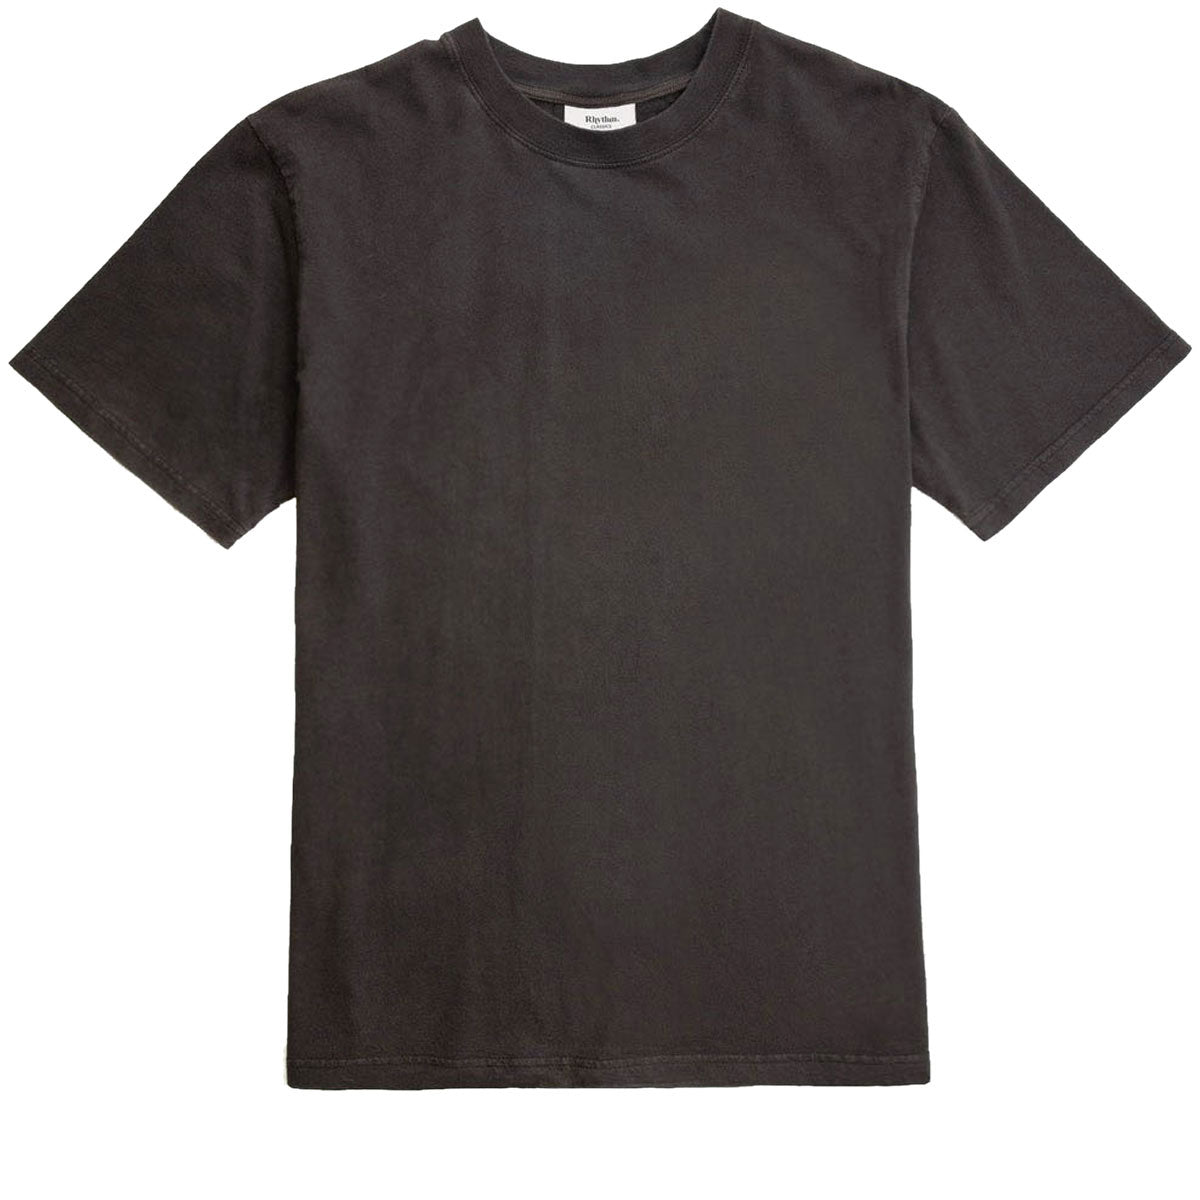 Rhythm Classic Brand T-Shirt - Vintage Black image 1